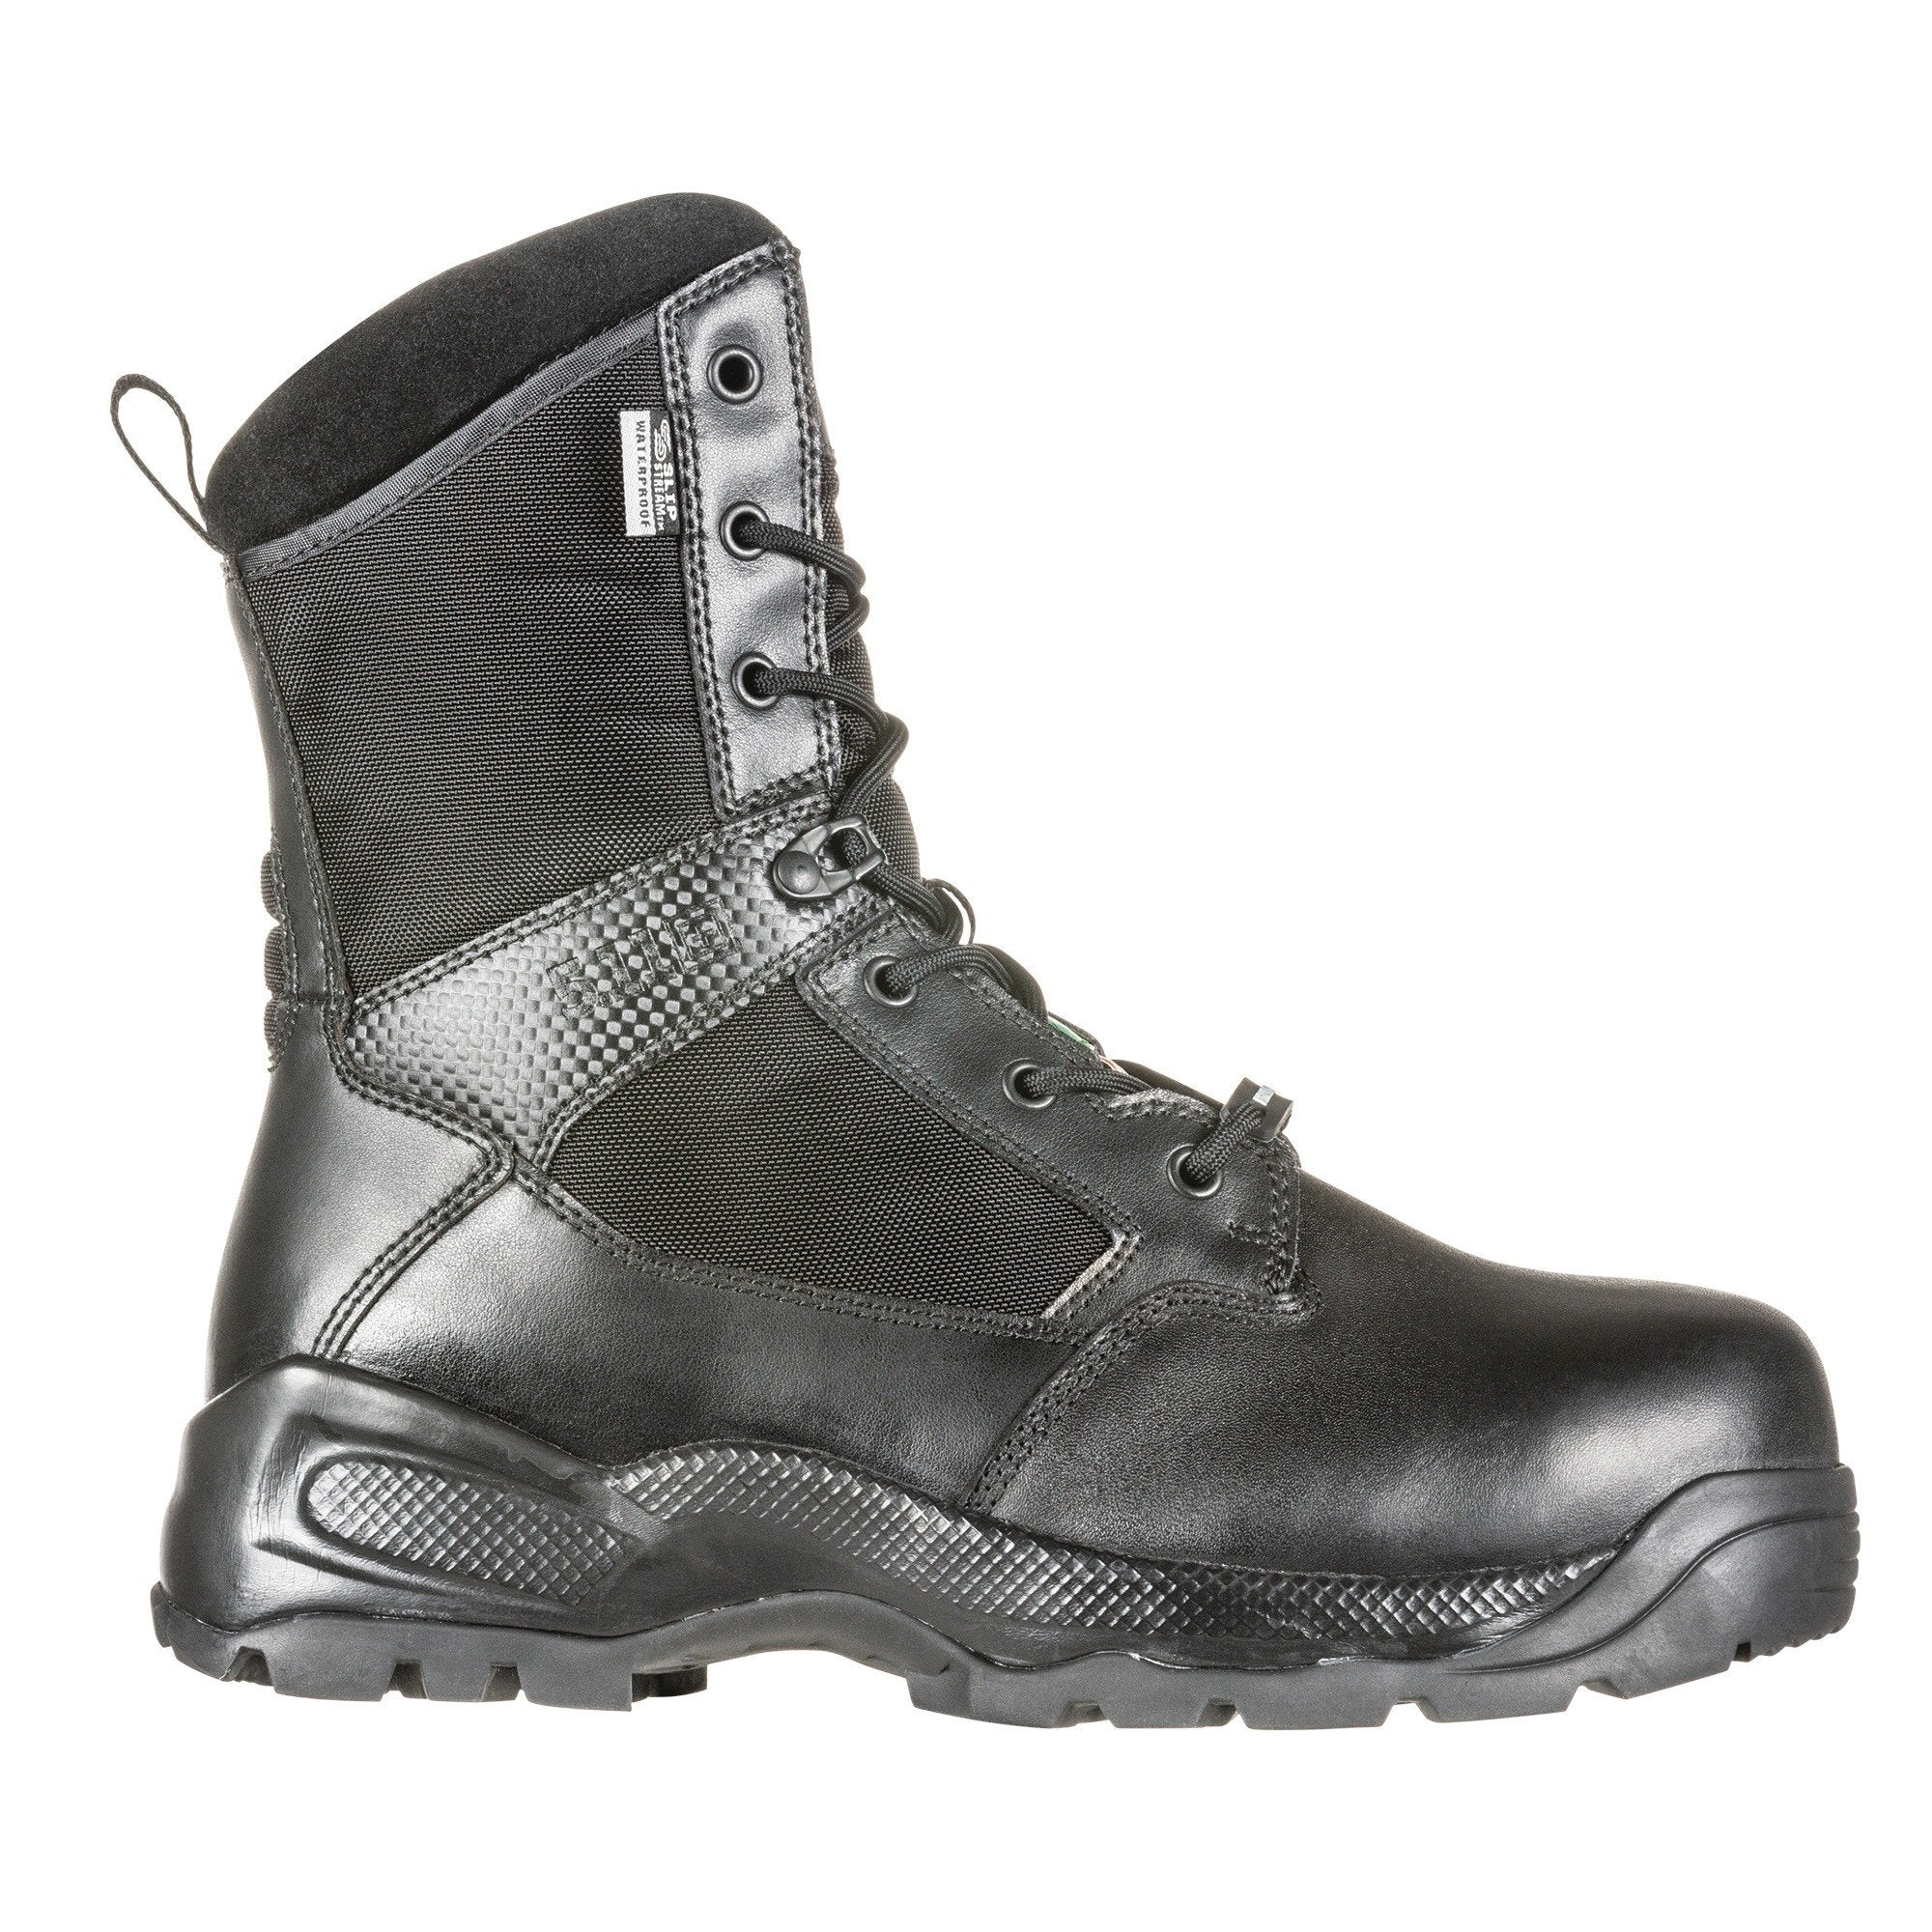 5.11 Tactical ATAC 8 Inches Shield 2.0 Side Zip Boots Black Footwear 5.11 Tactical 4.0 US Regular Tactical Gear Supplier Tactical Distributors Australia